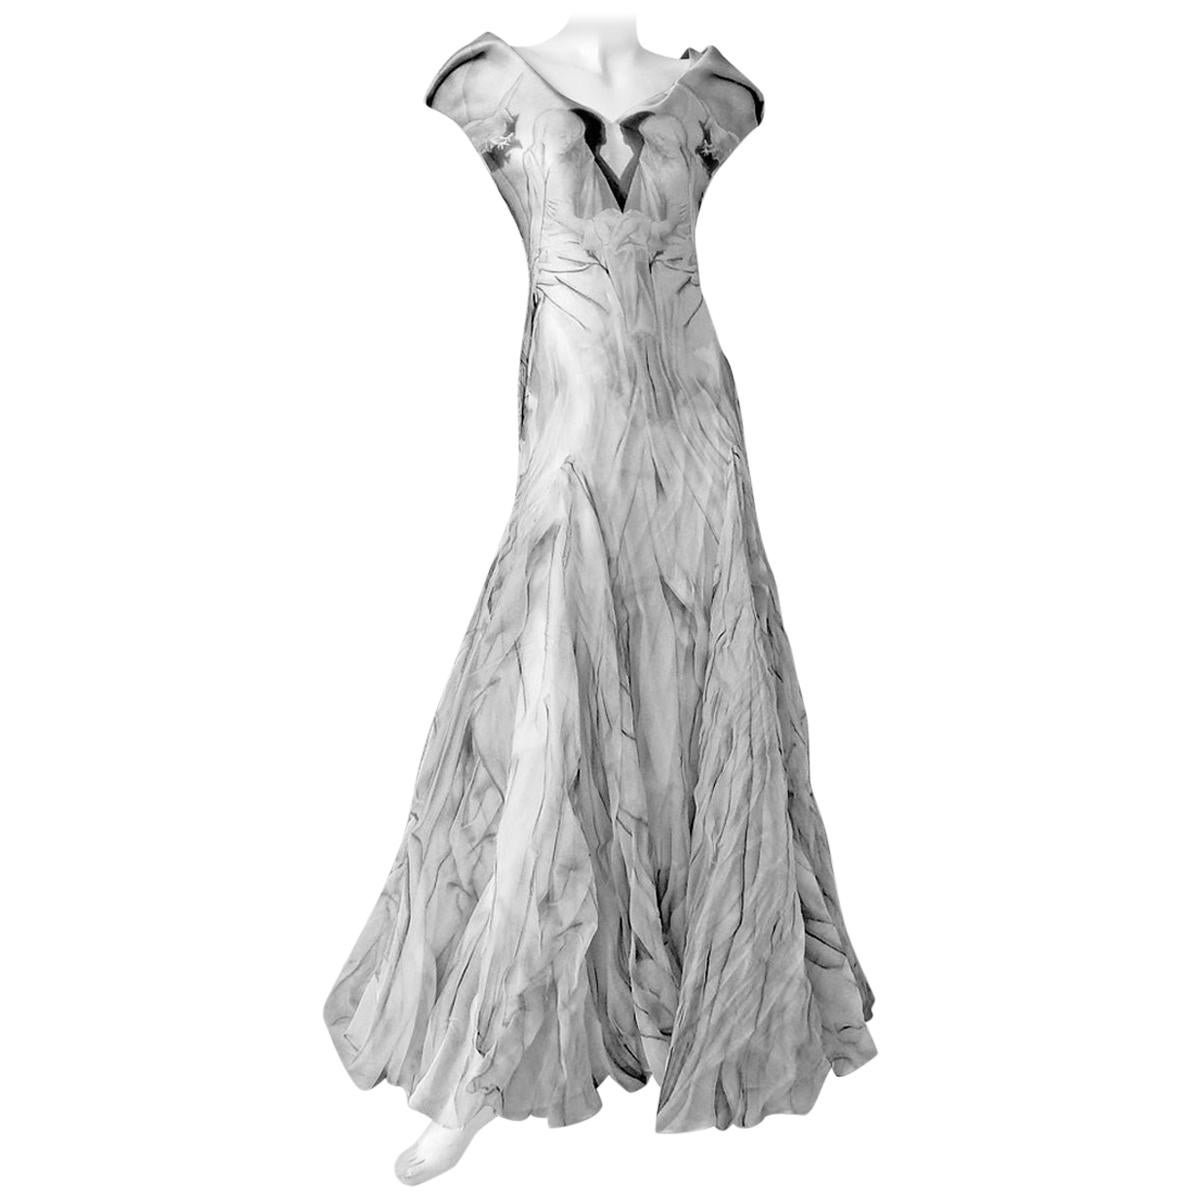 Alexander McQueen Angels & Demons Final Collection "Birth of Venus" Dress Gown